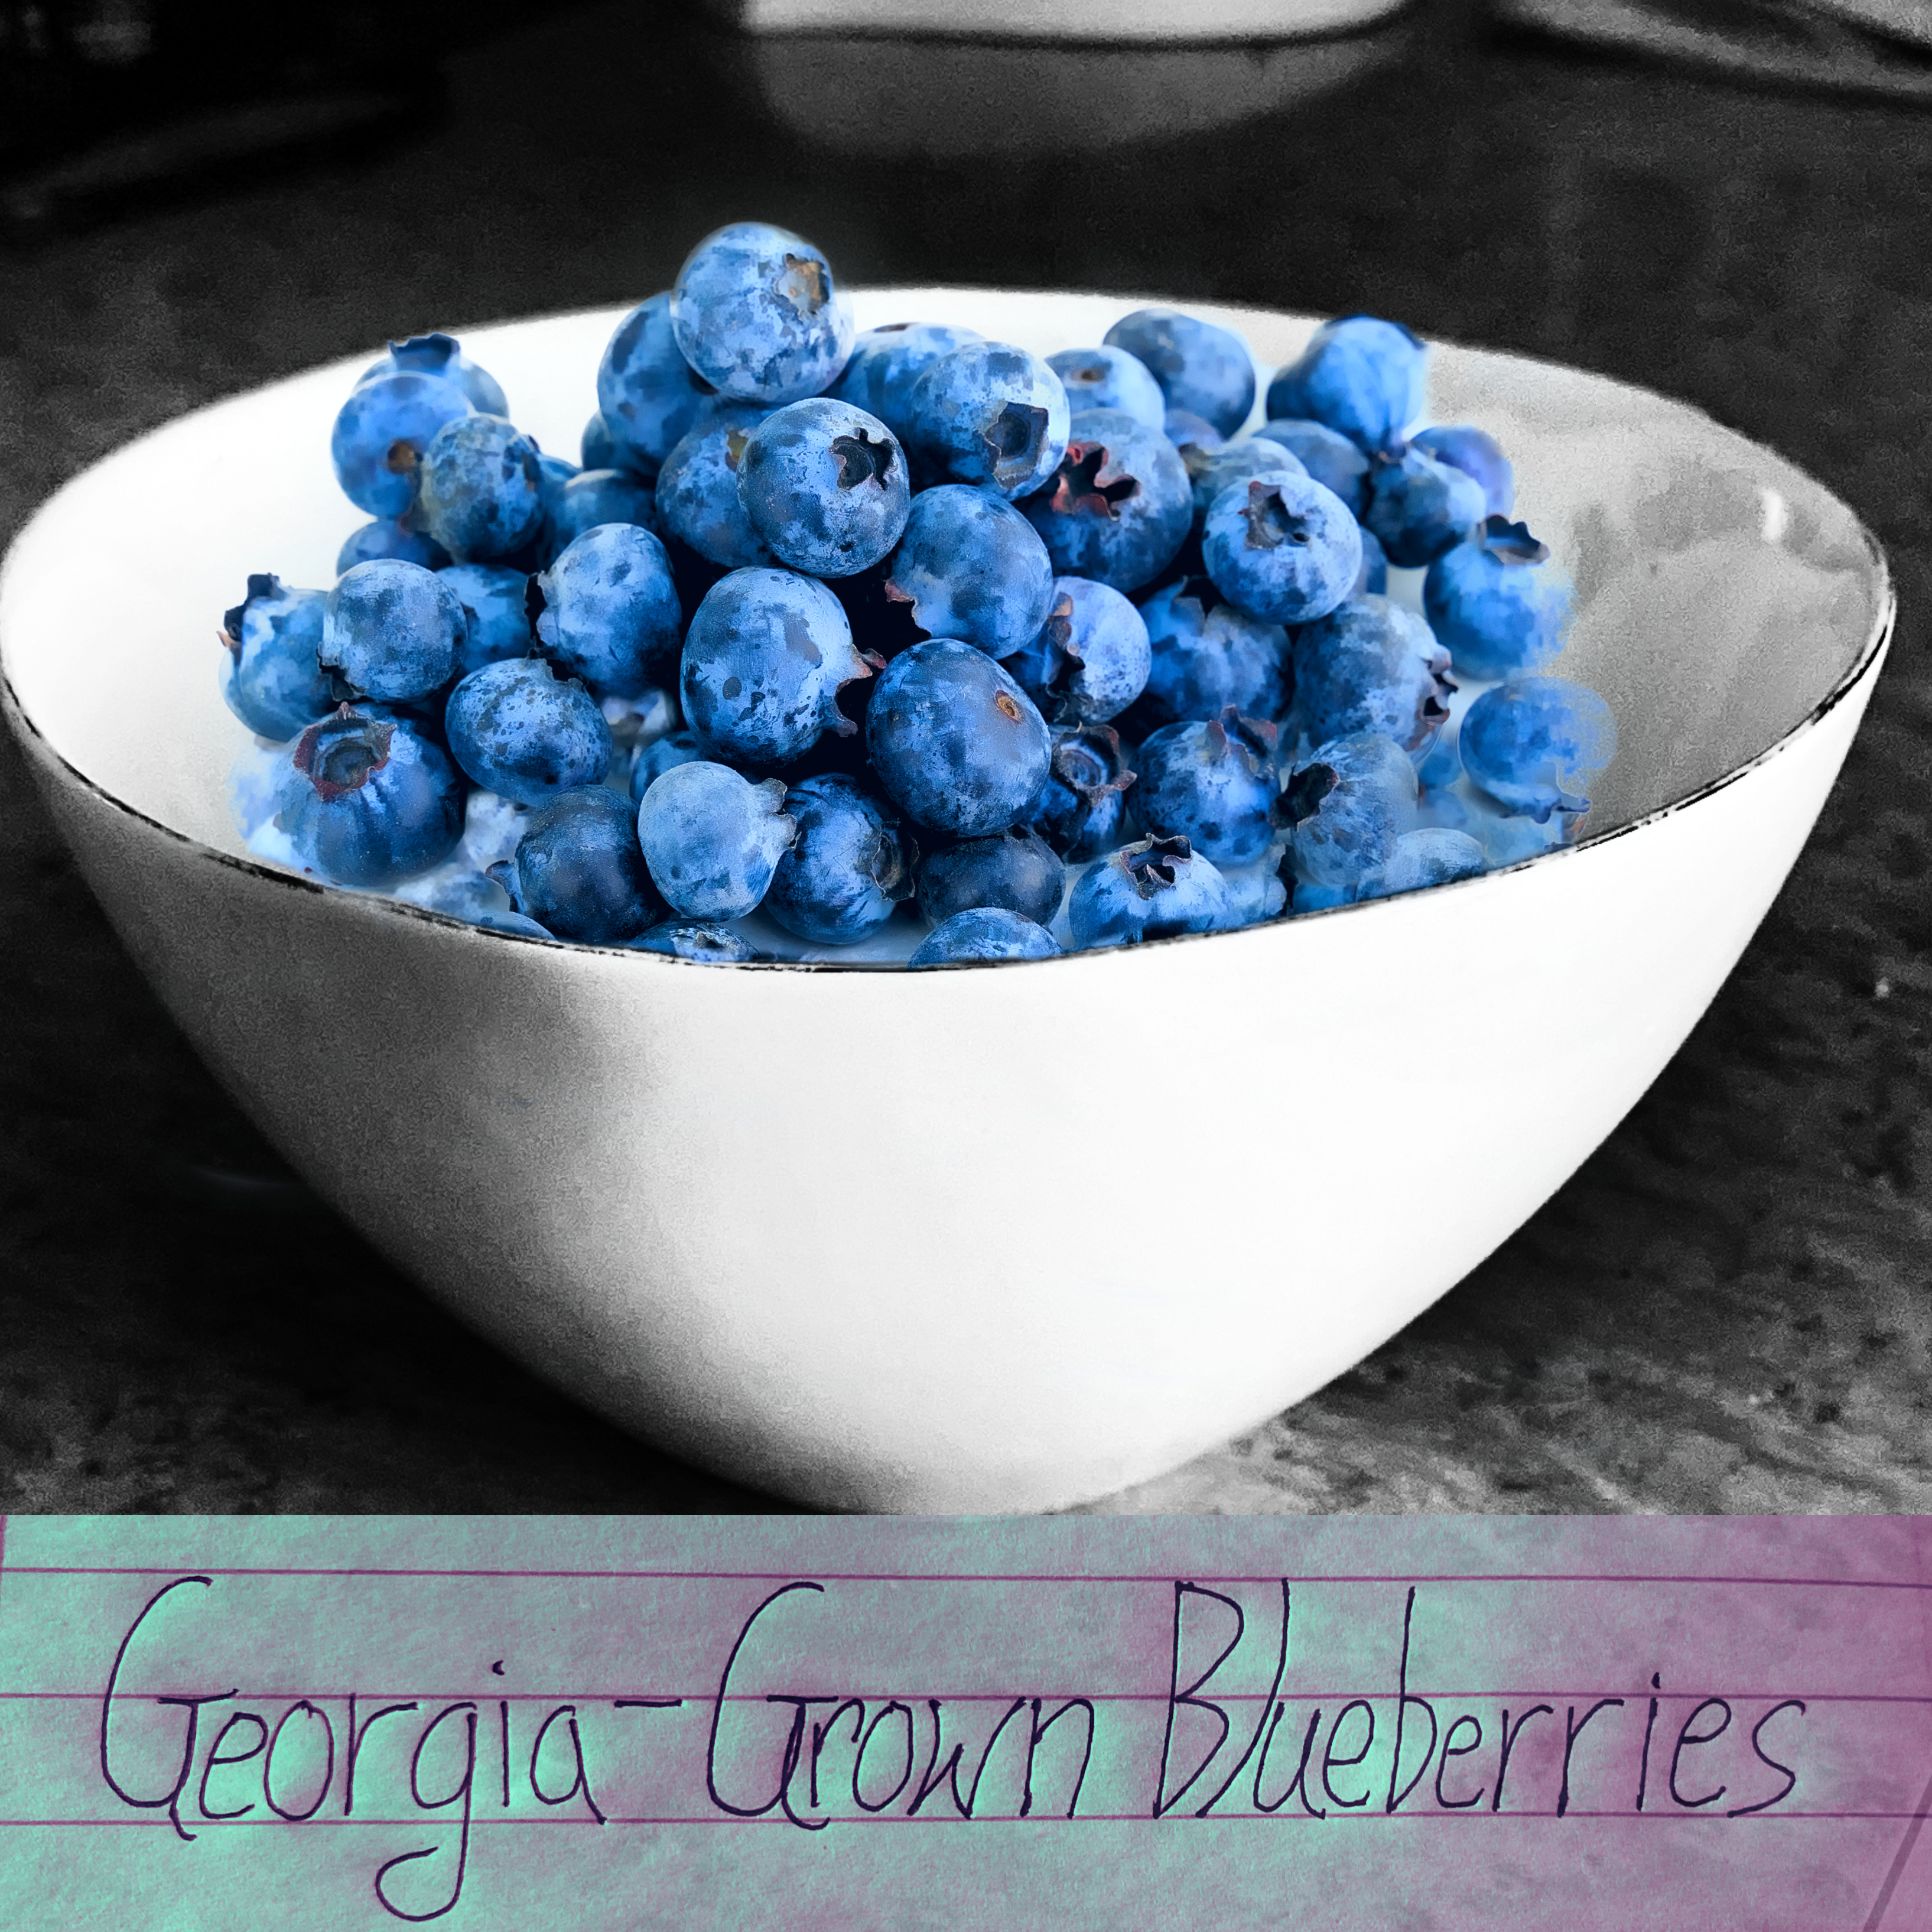 Georgia-Grown Blueberries Album Art